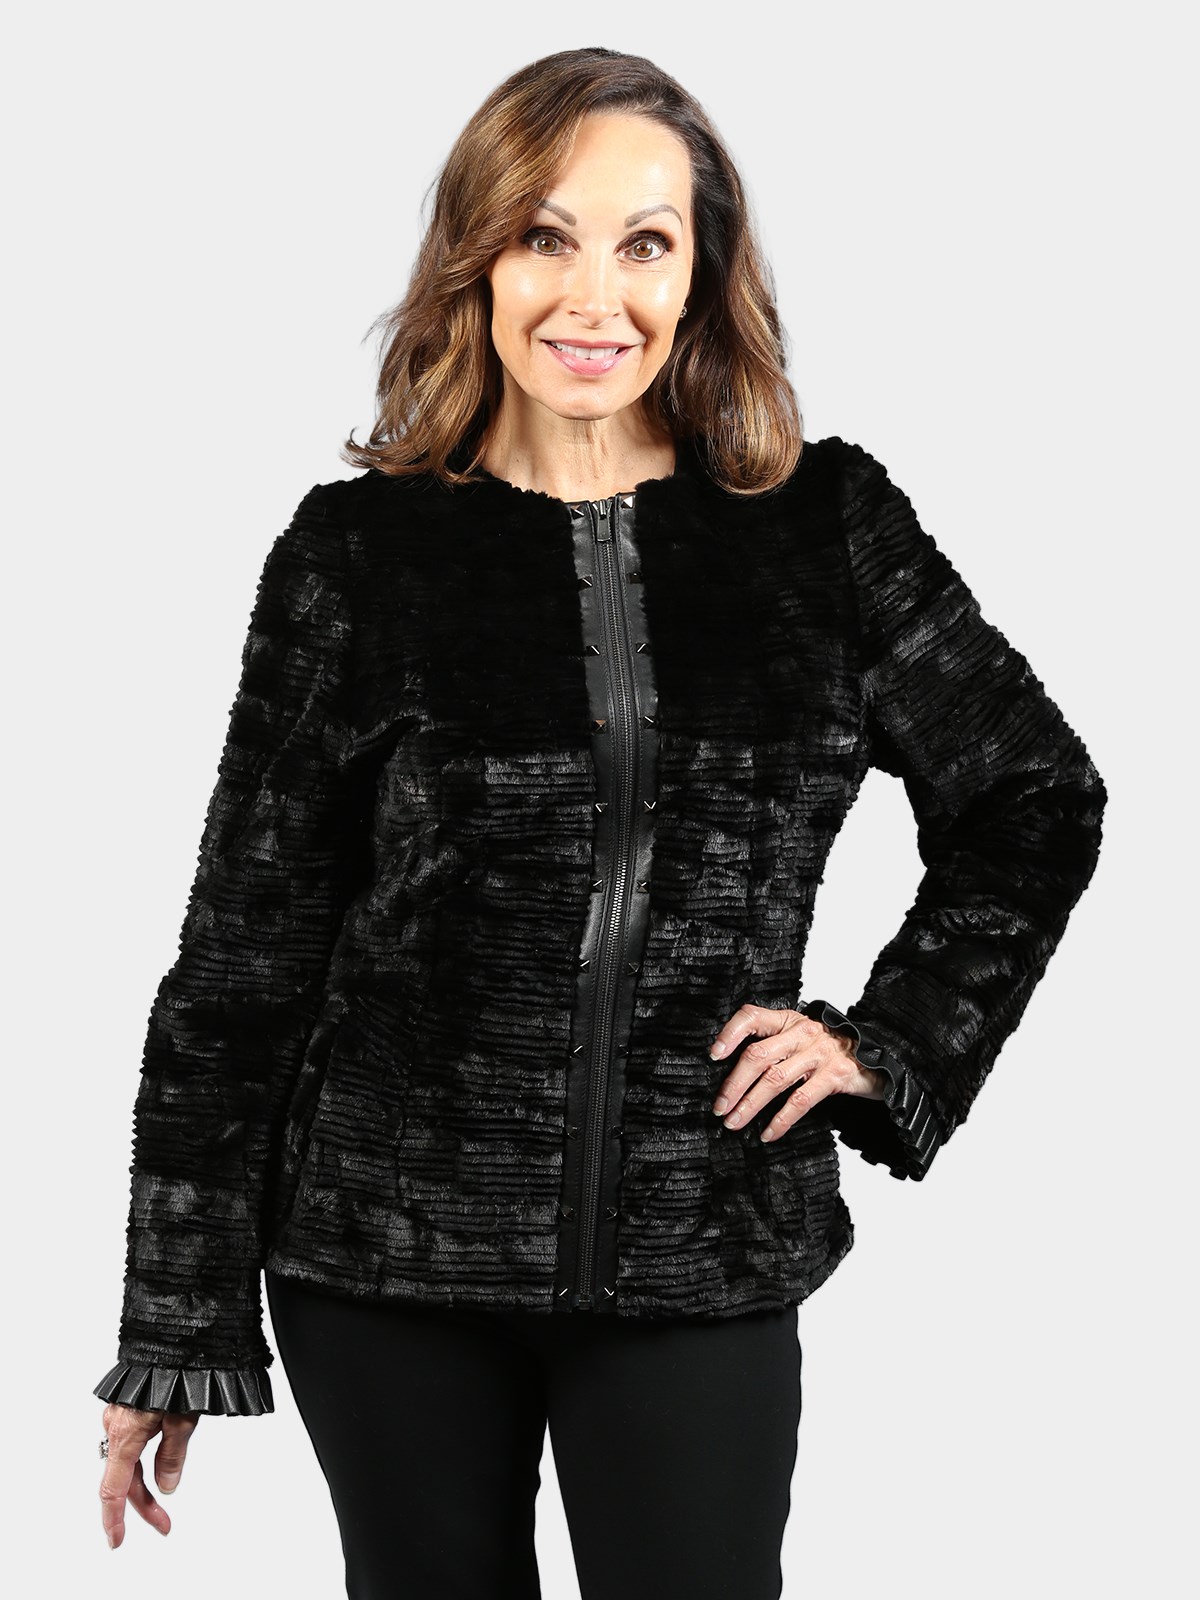 Woman's Black Sheared Mink Fur Jacket by Gorksi of Montreal